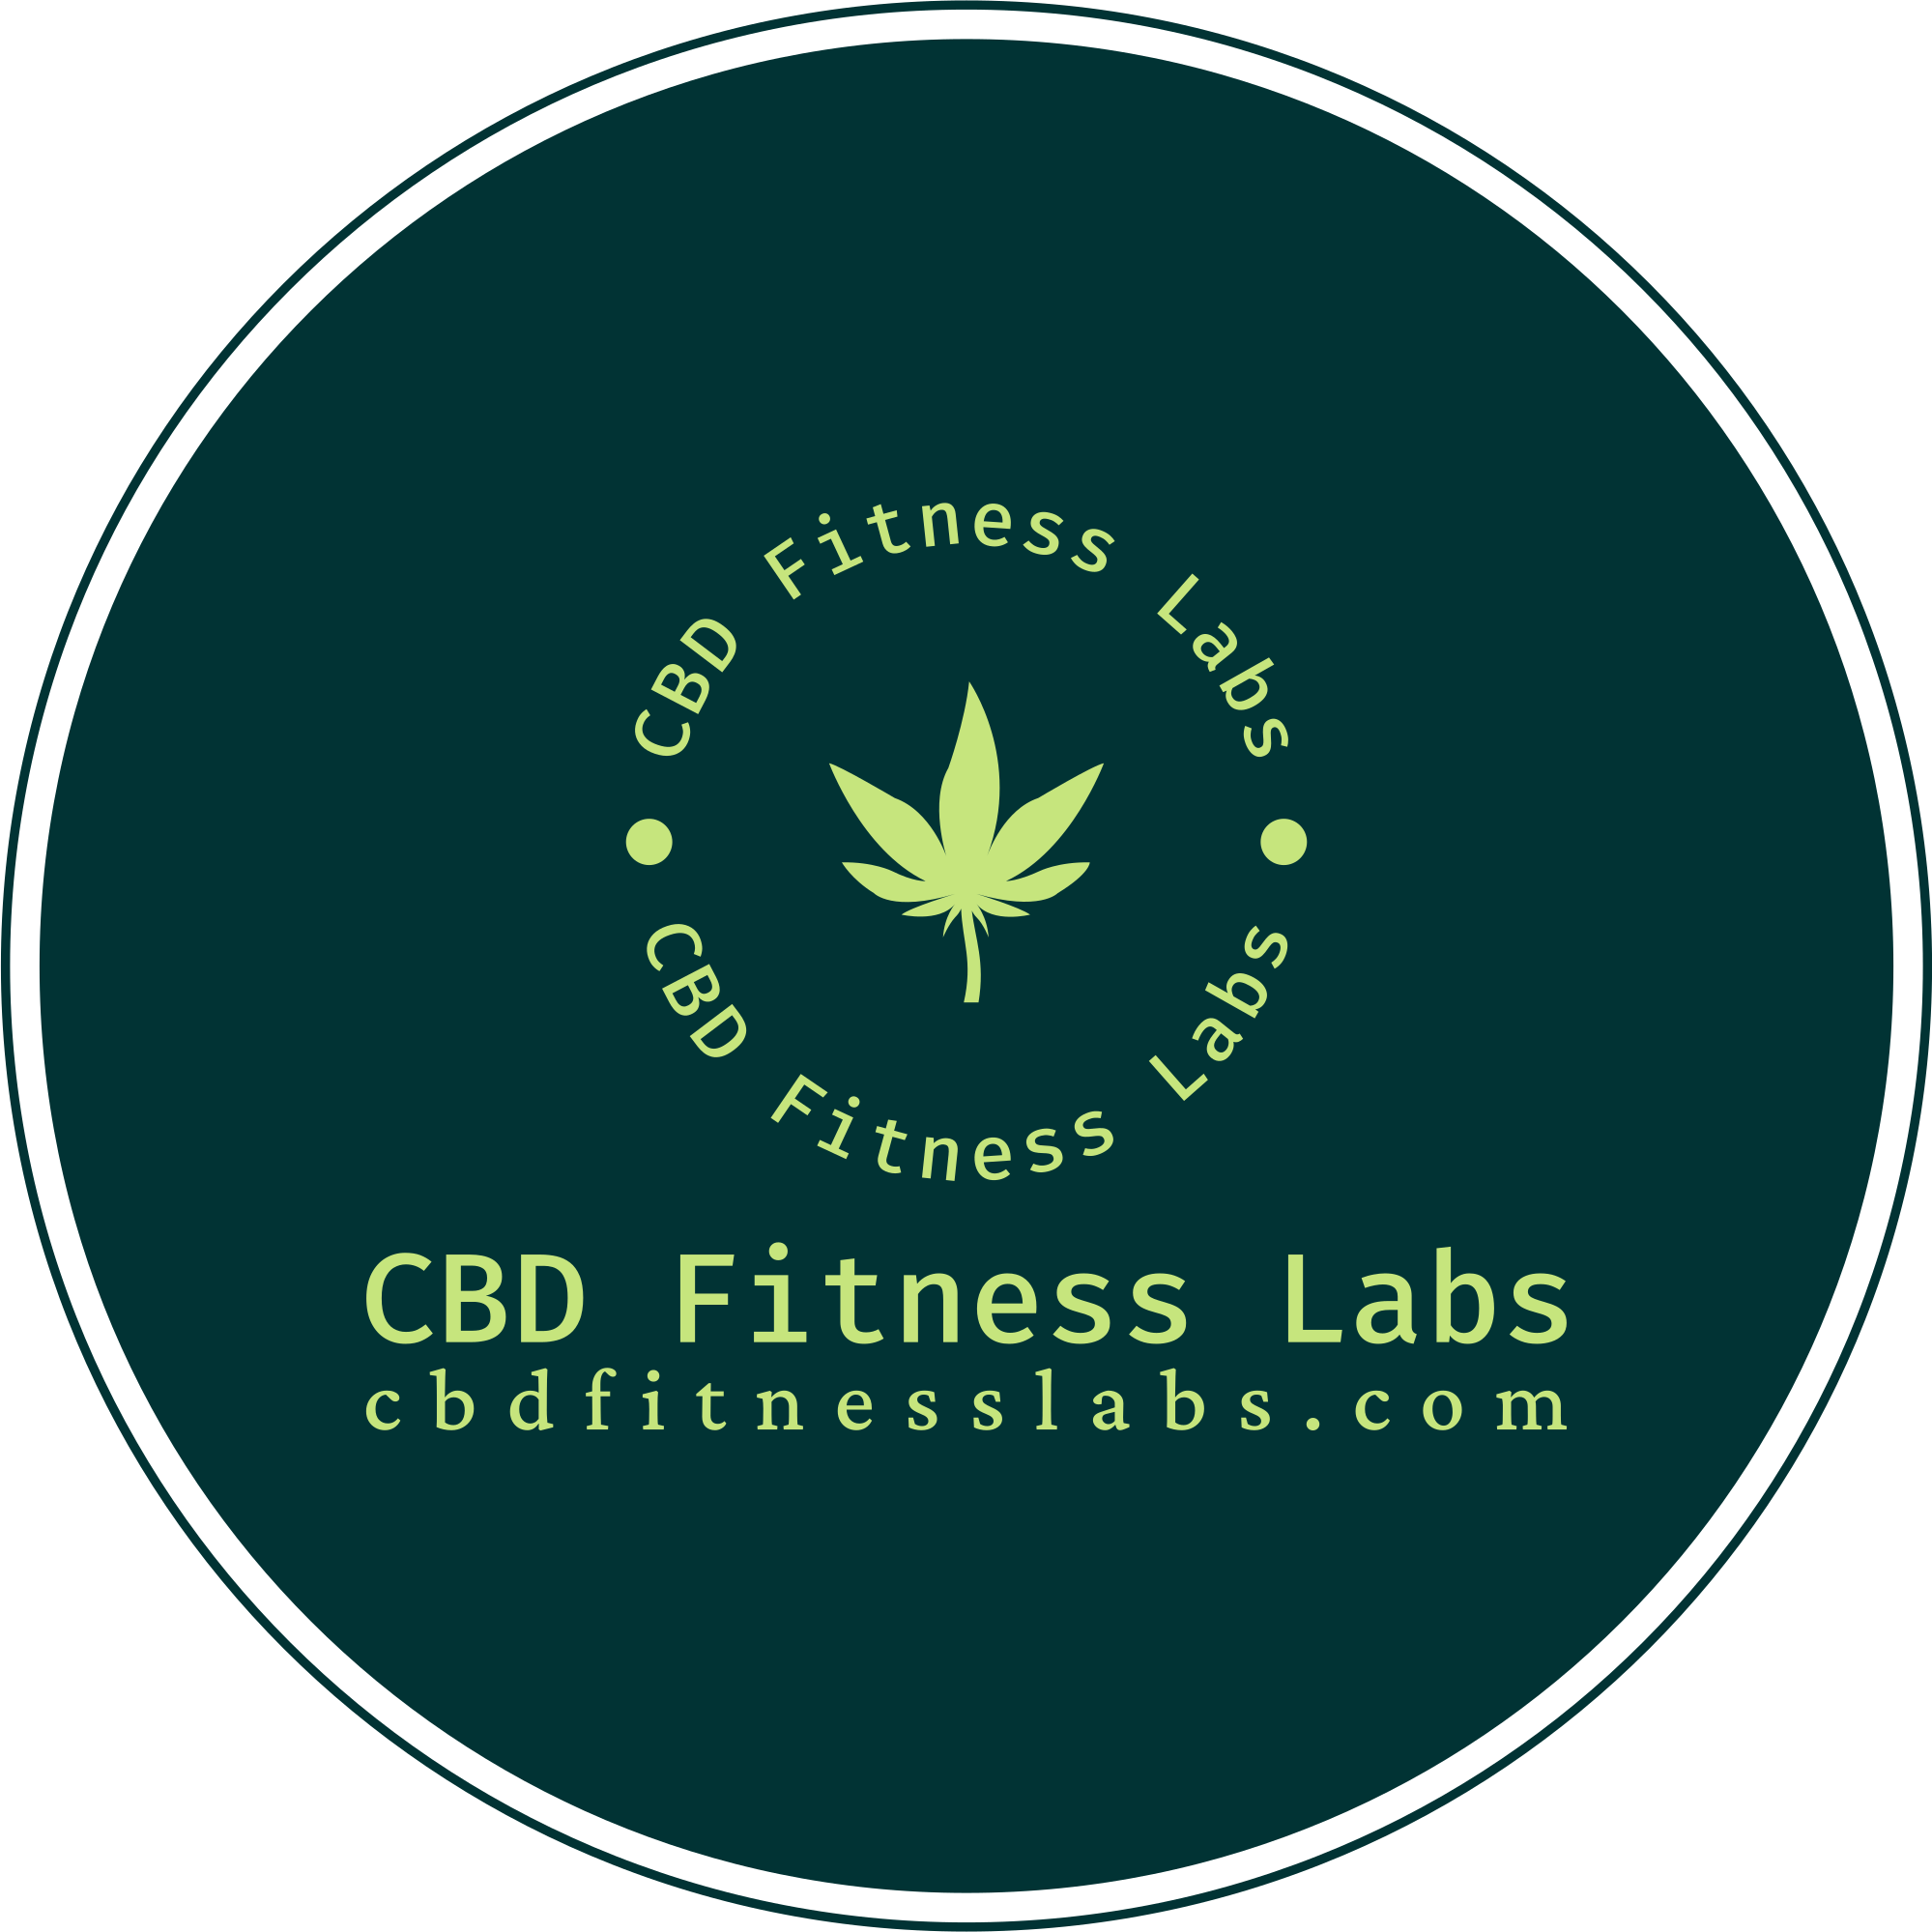 cbdfitnesslabs.com